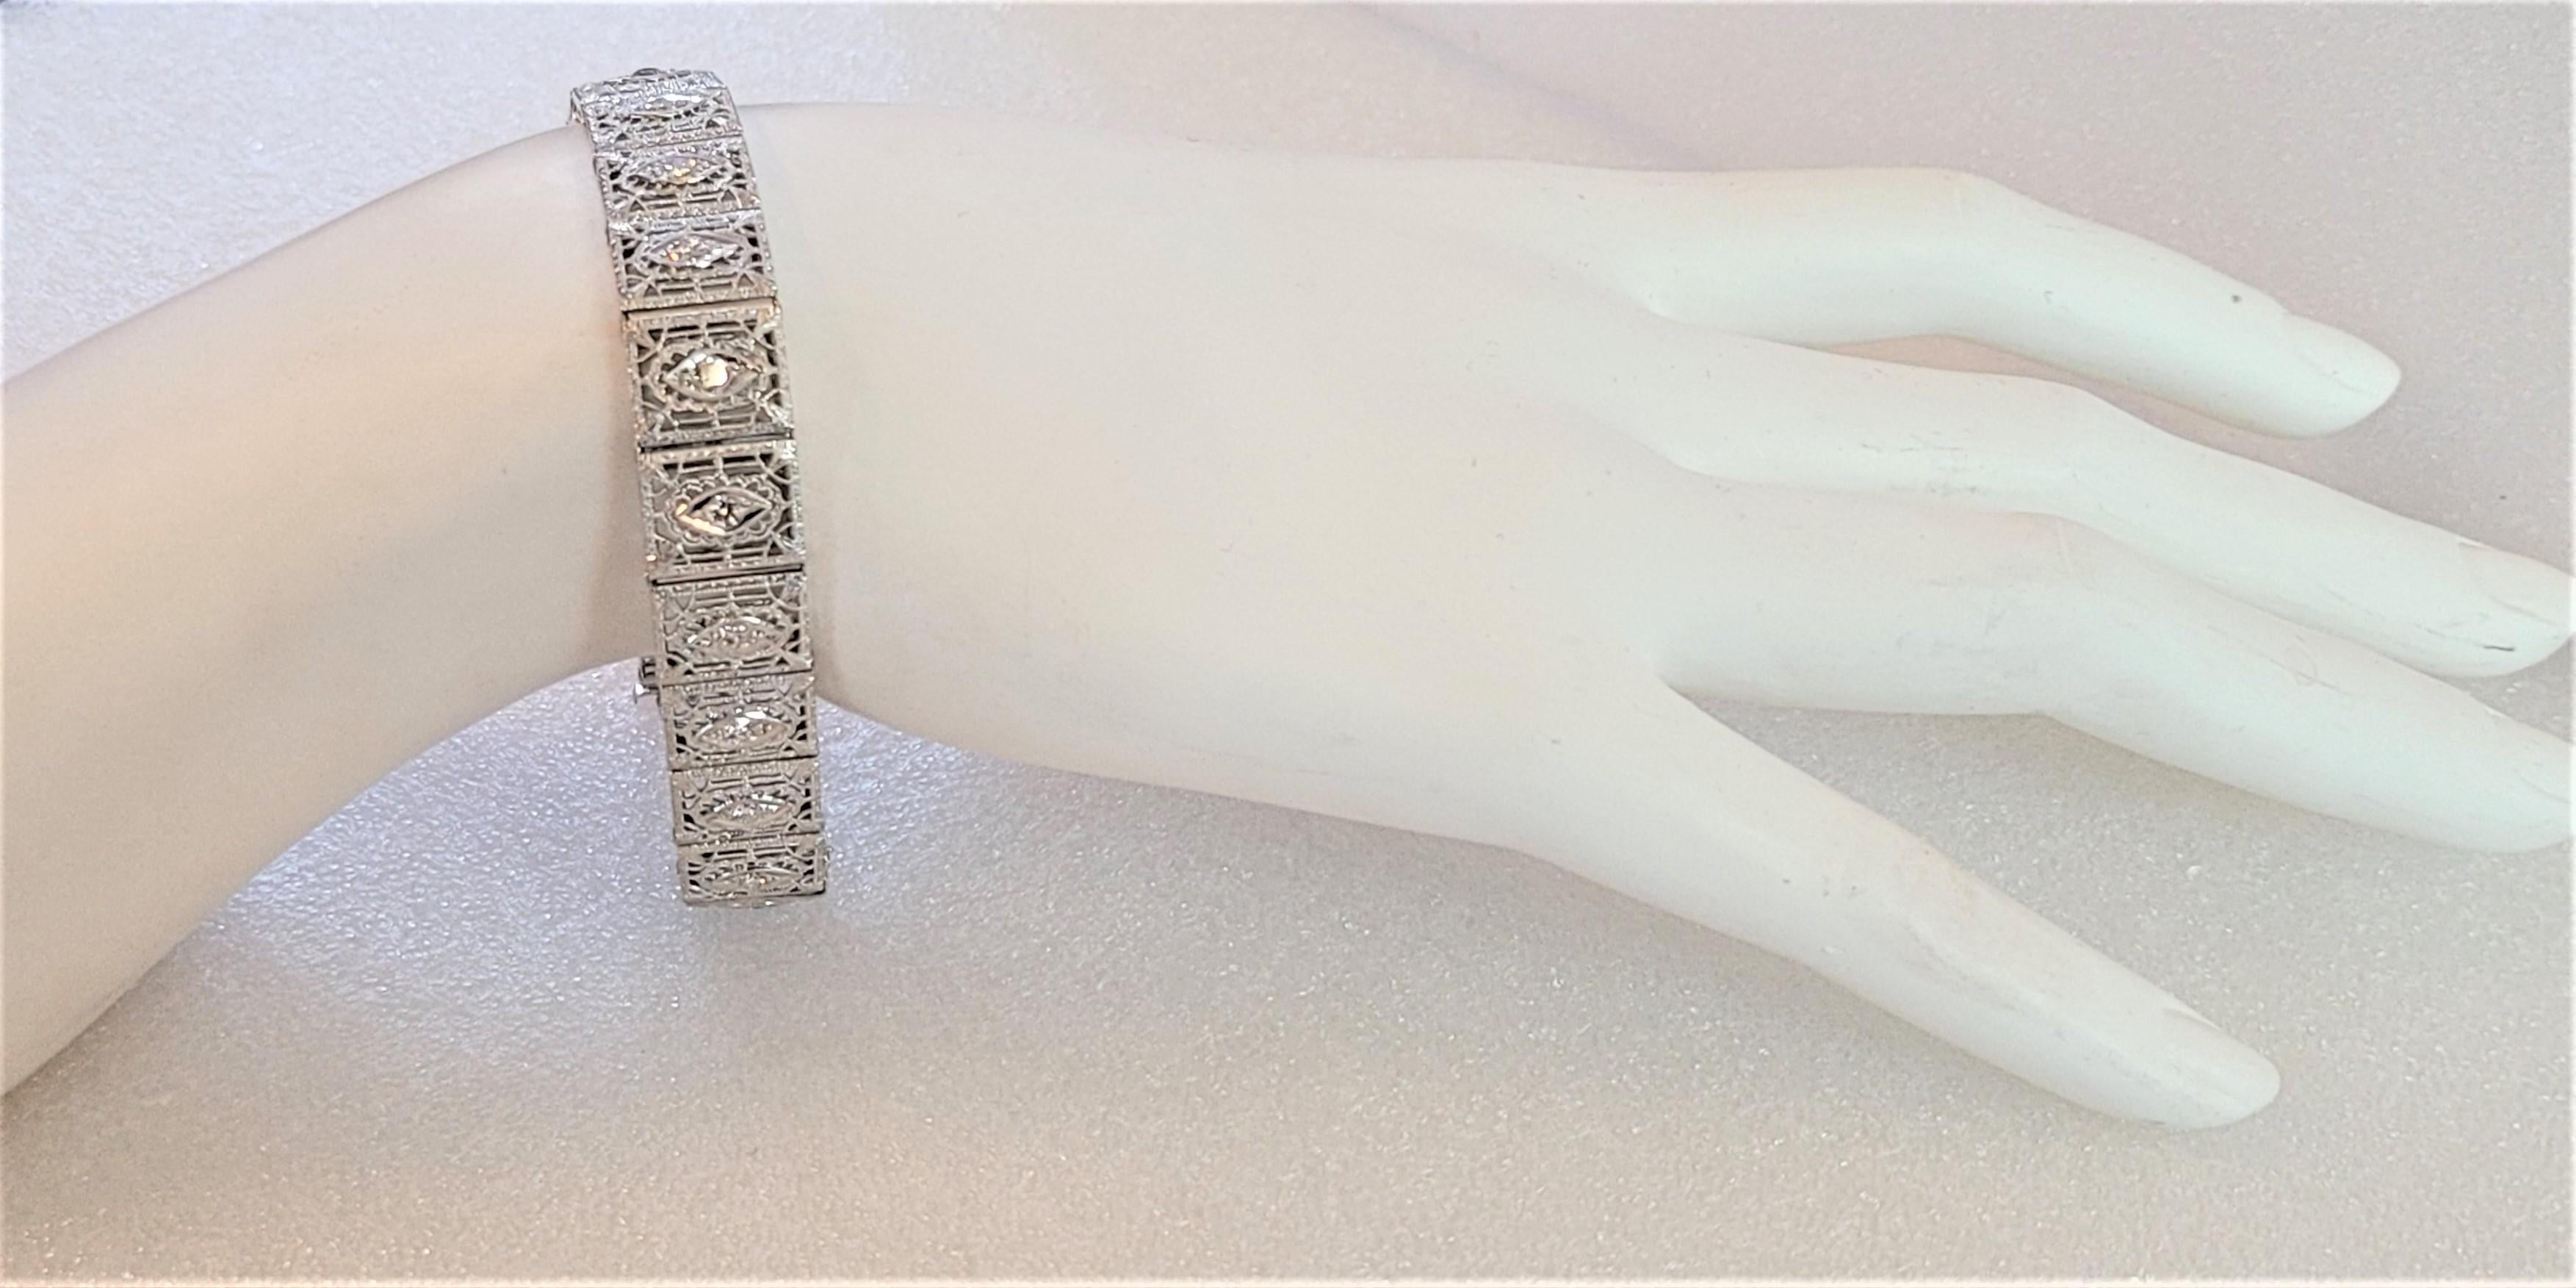 Hand-Made Bracelet with Diamonds 
Material 14K & Platinum 950
Gender Women 
Diamonds 1.96ctw 
Diamond Clarity VS
Color Grade E
Bracelet Weight  17.6gr
Mint Condition Like New
Retail Price $ 5000